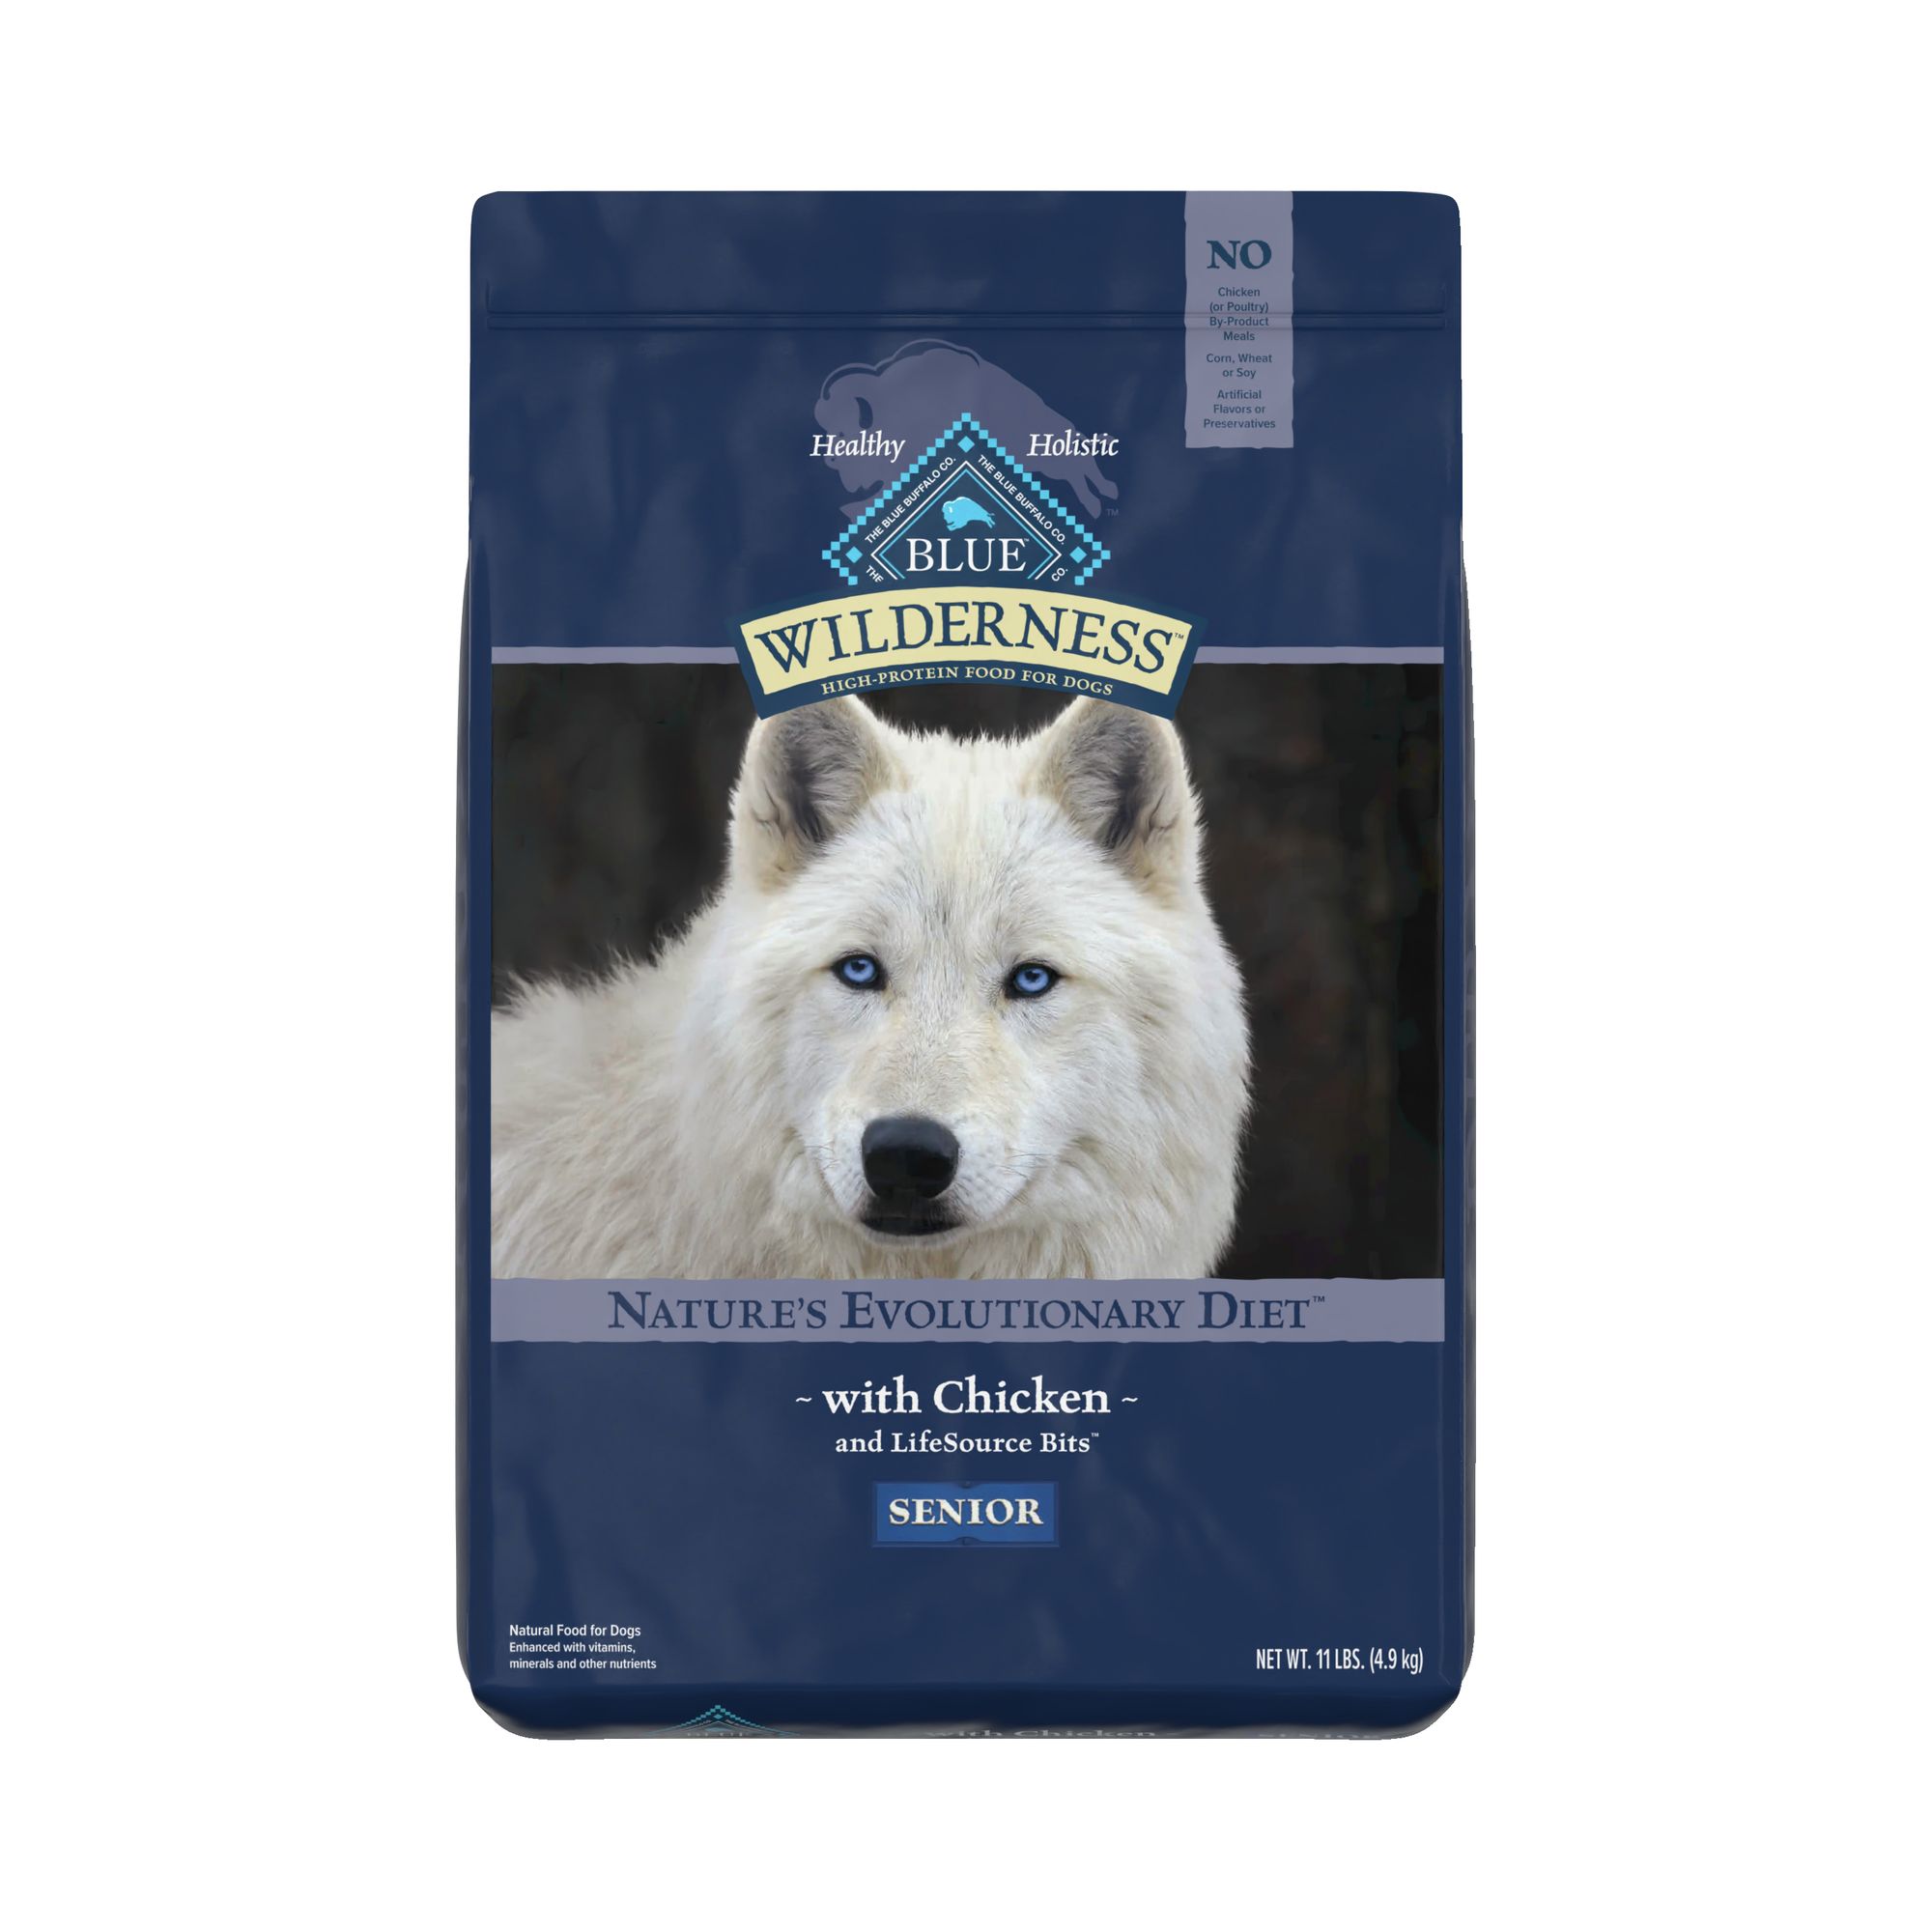 blue wilderness senior canned dog food